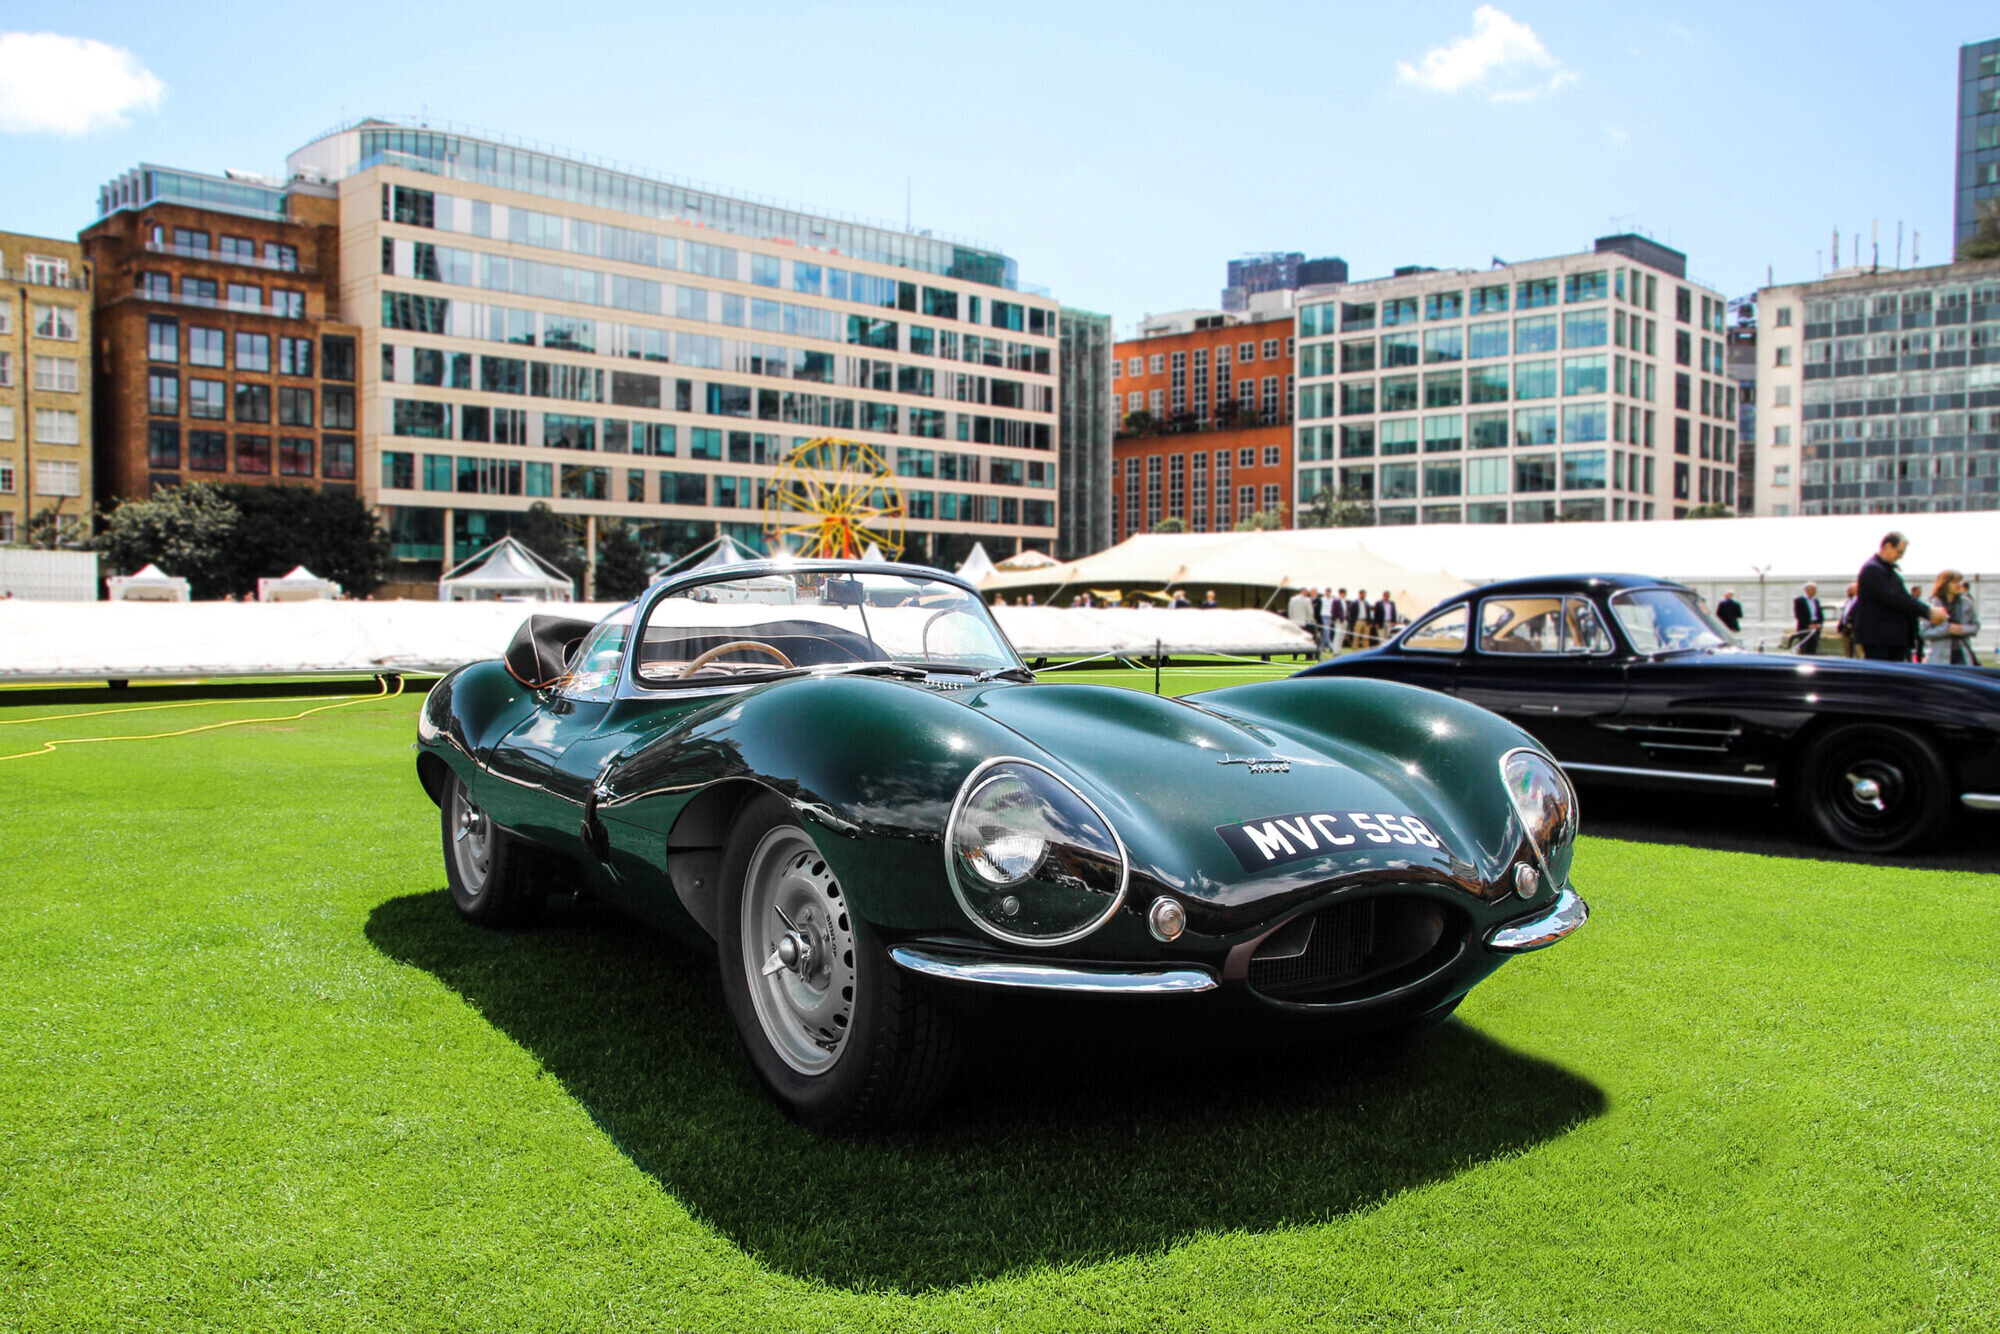 London,,England,-,09.06.17:,A,Classic,Jaguar,Xkss,Sports,Car